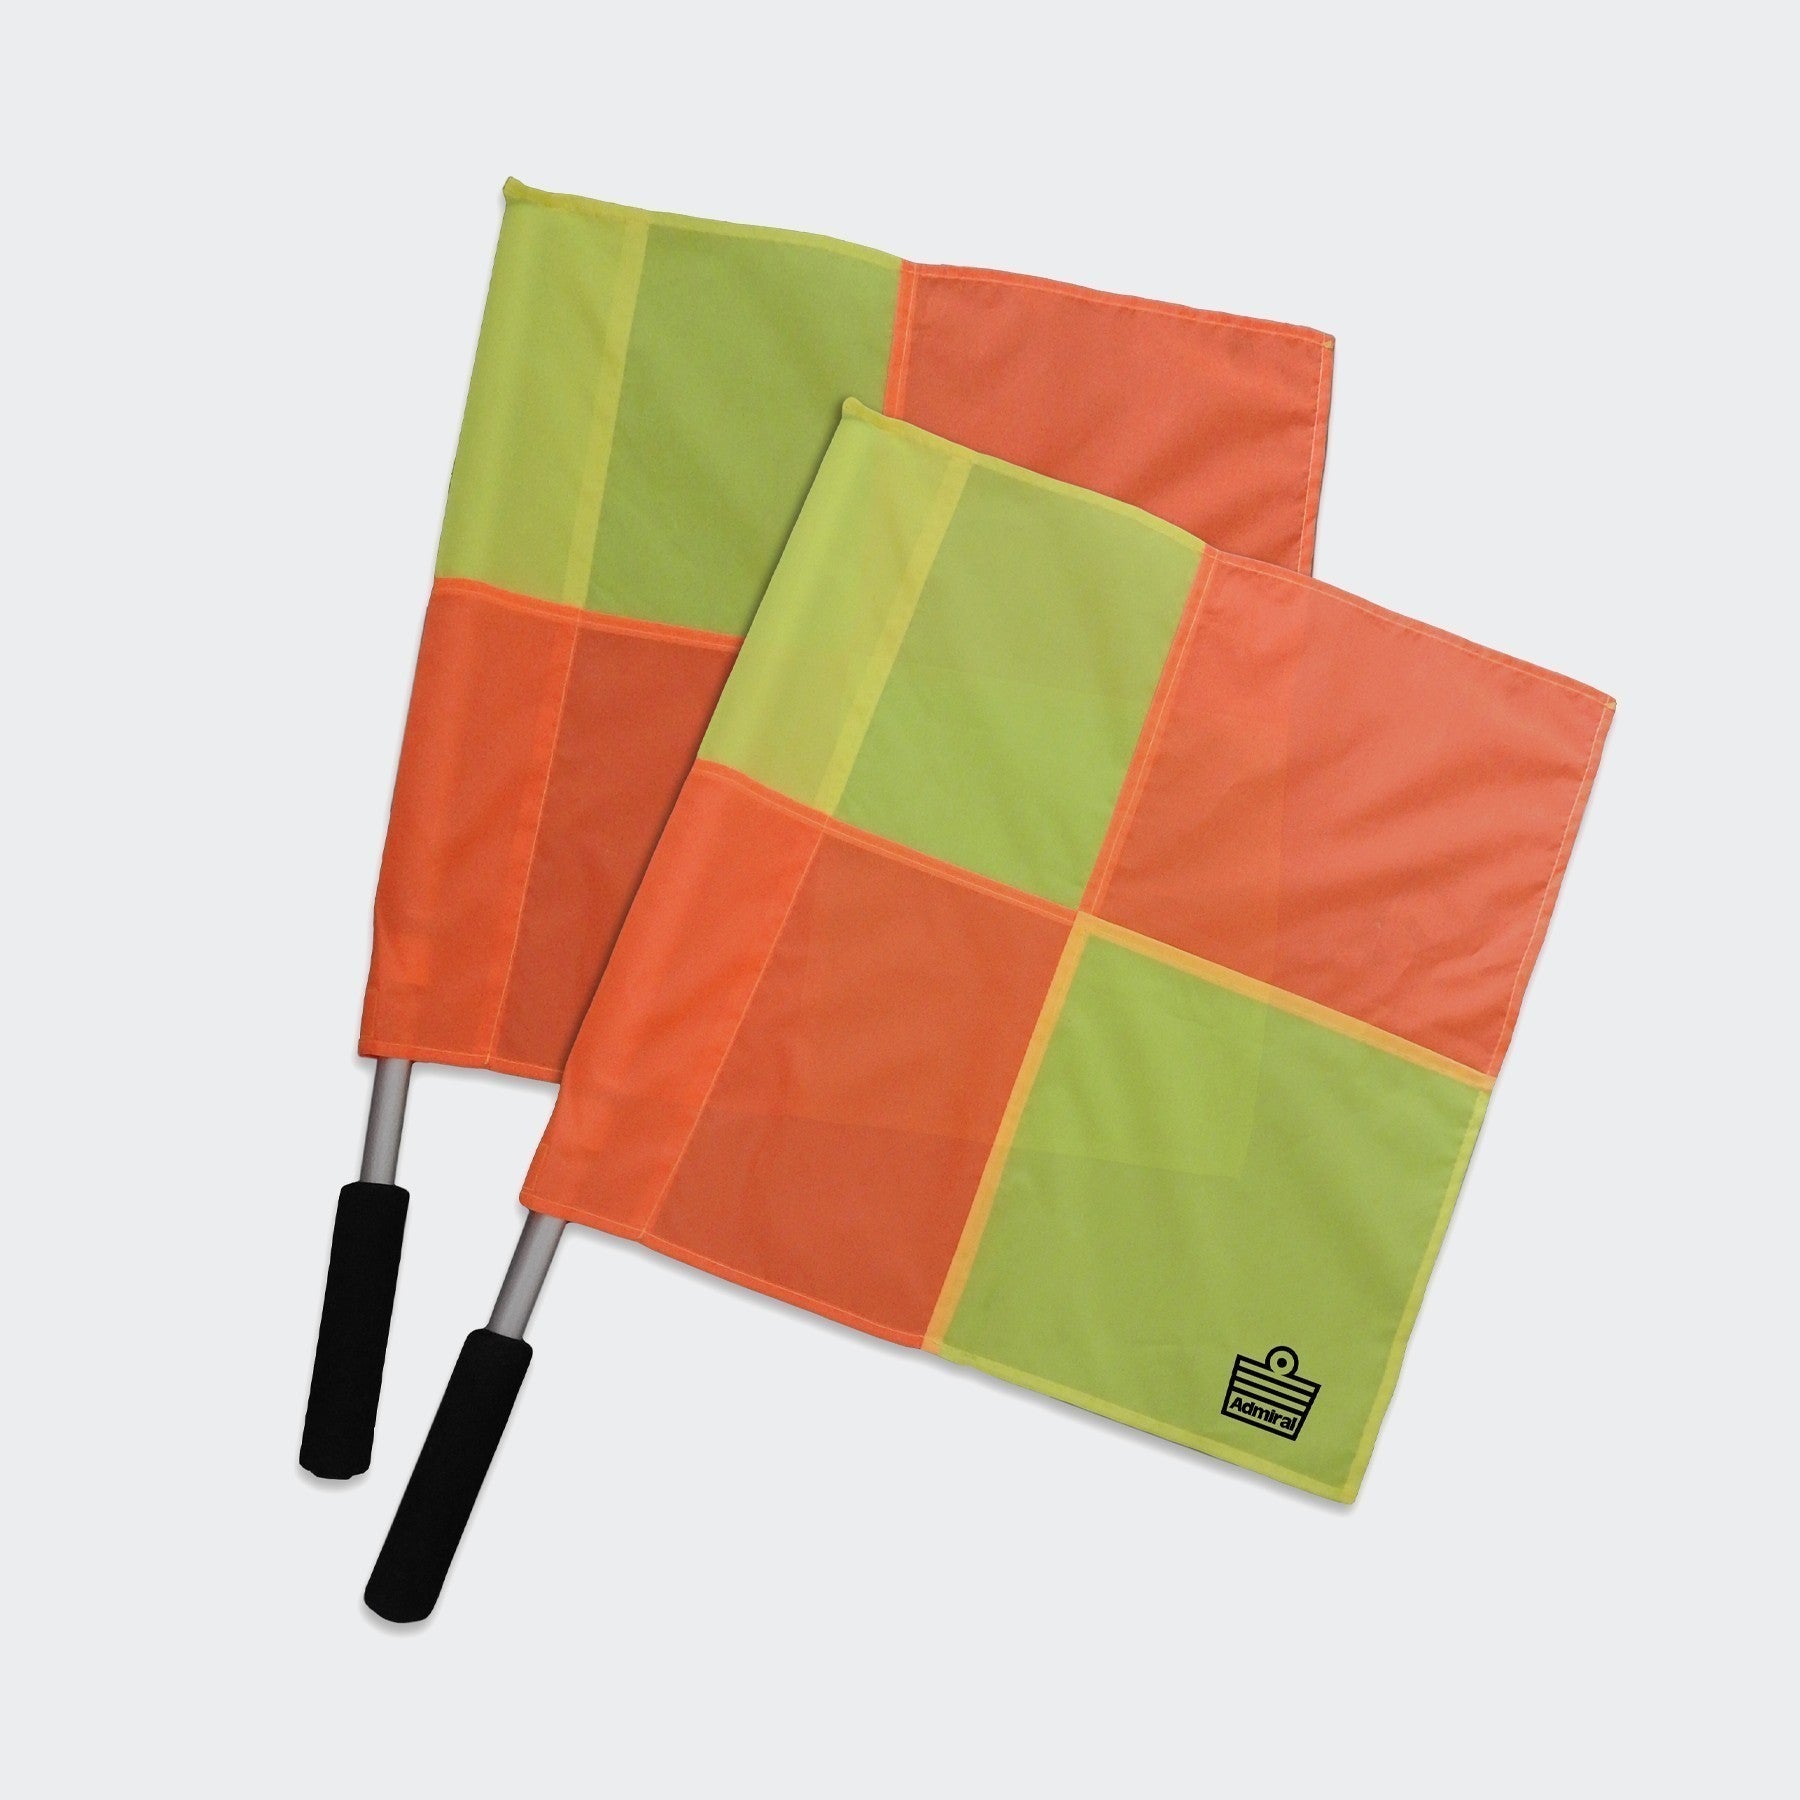 Premier Deluxe Referee Flag Set